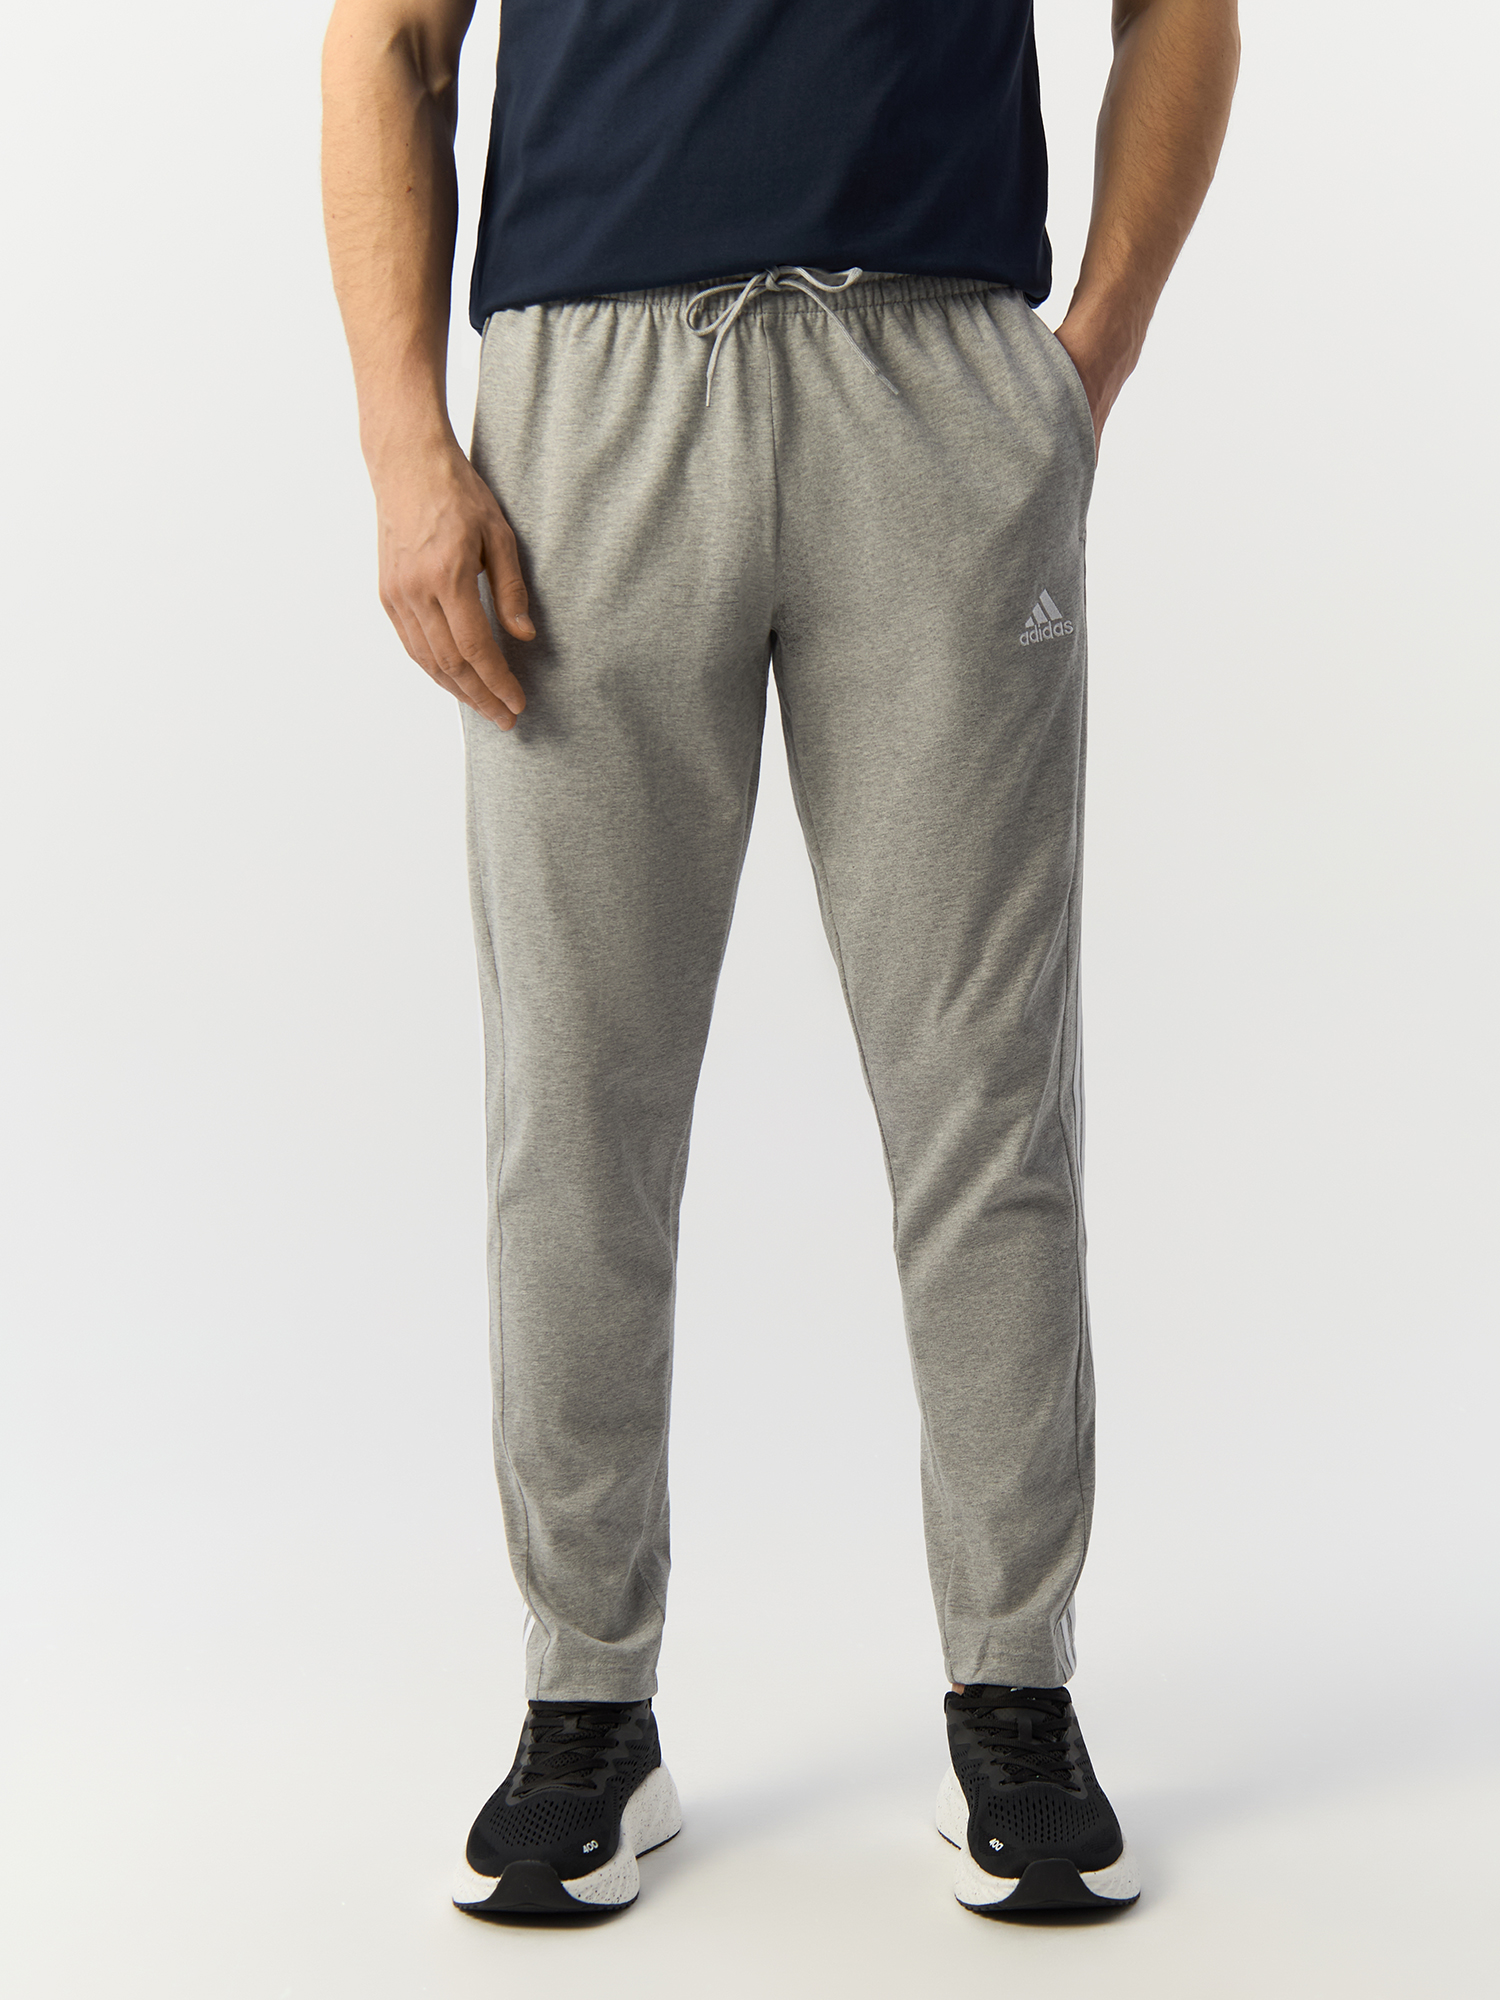 Брюки Adidas для мужчин, спортивные, IC0046, размер XL, серо-белые-83F7